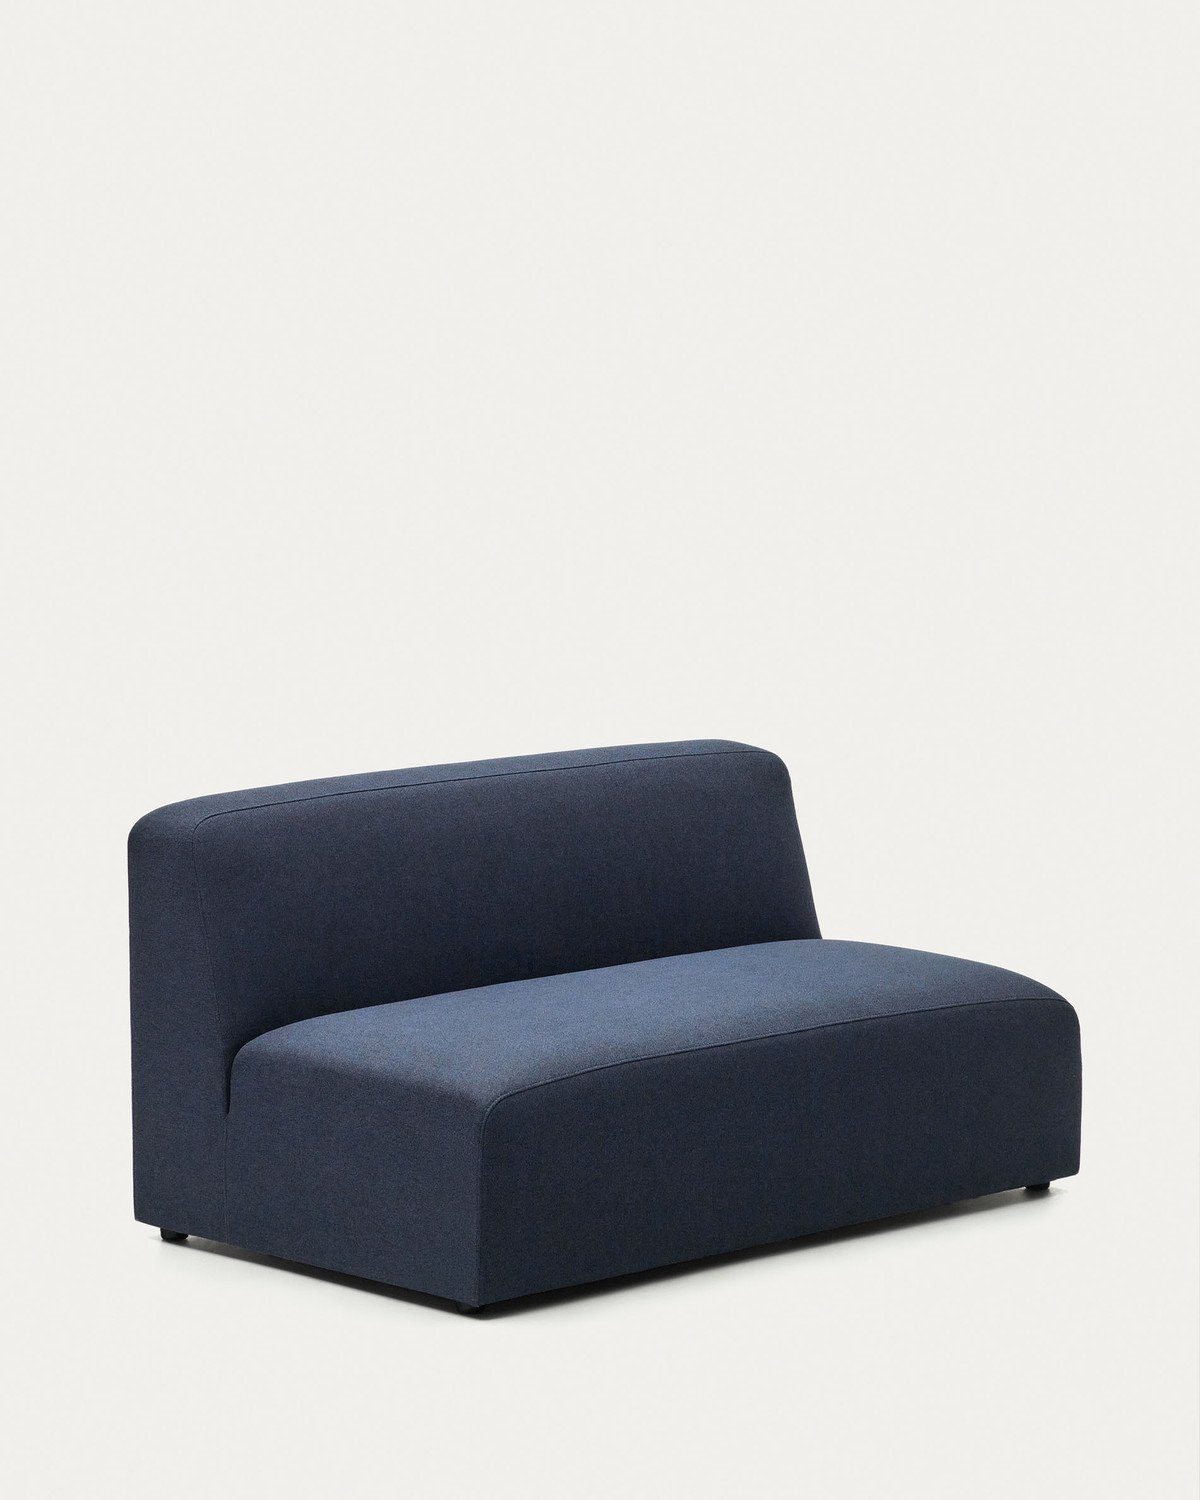 150x 89 78 Sofa x cm 2-Sitzer-Modul Blau Modul Sitzgelegenheit Natur24 Neu Neom